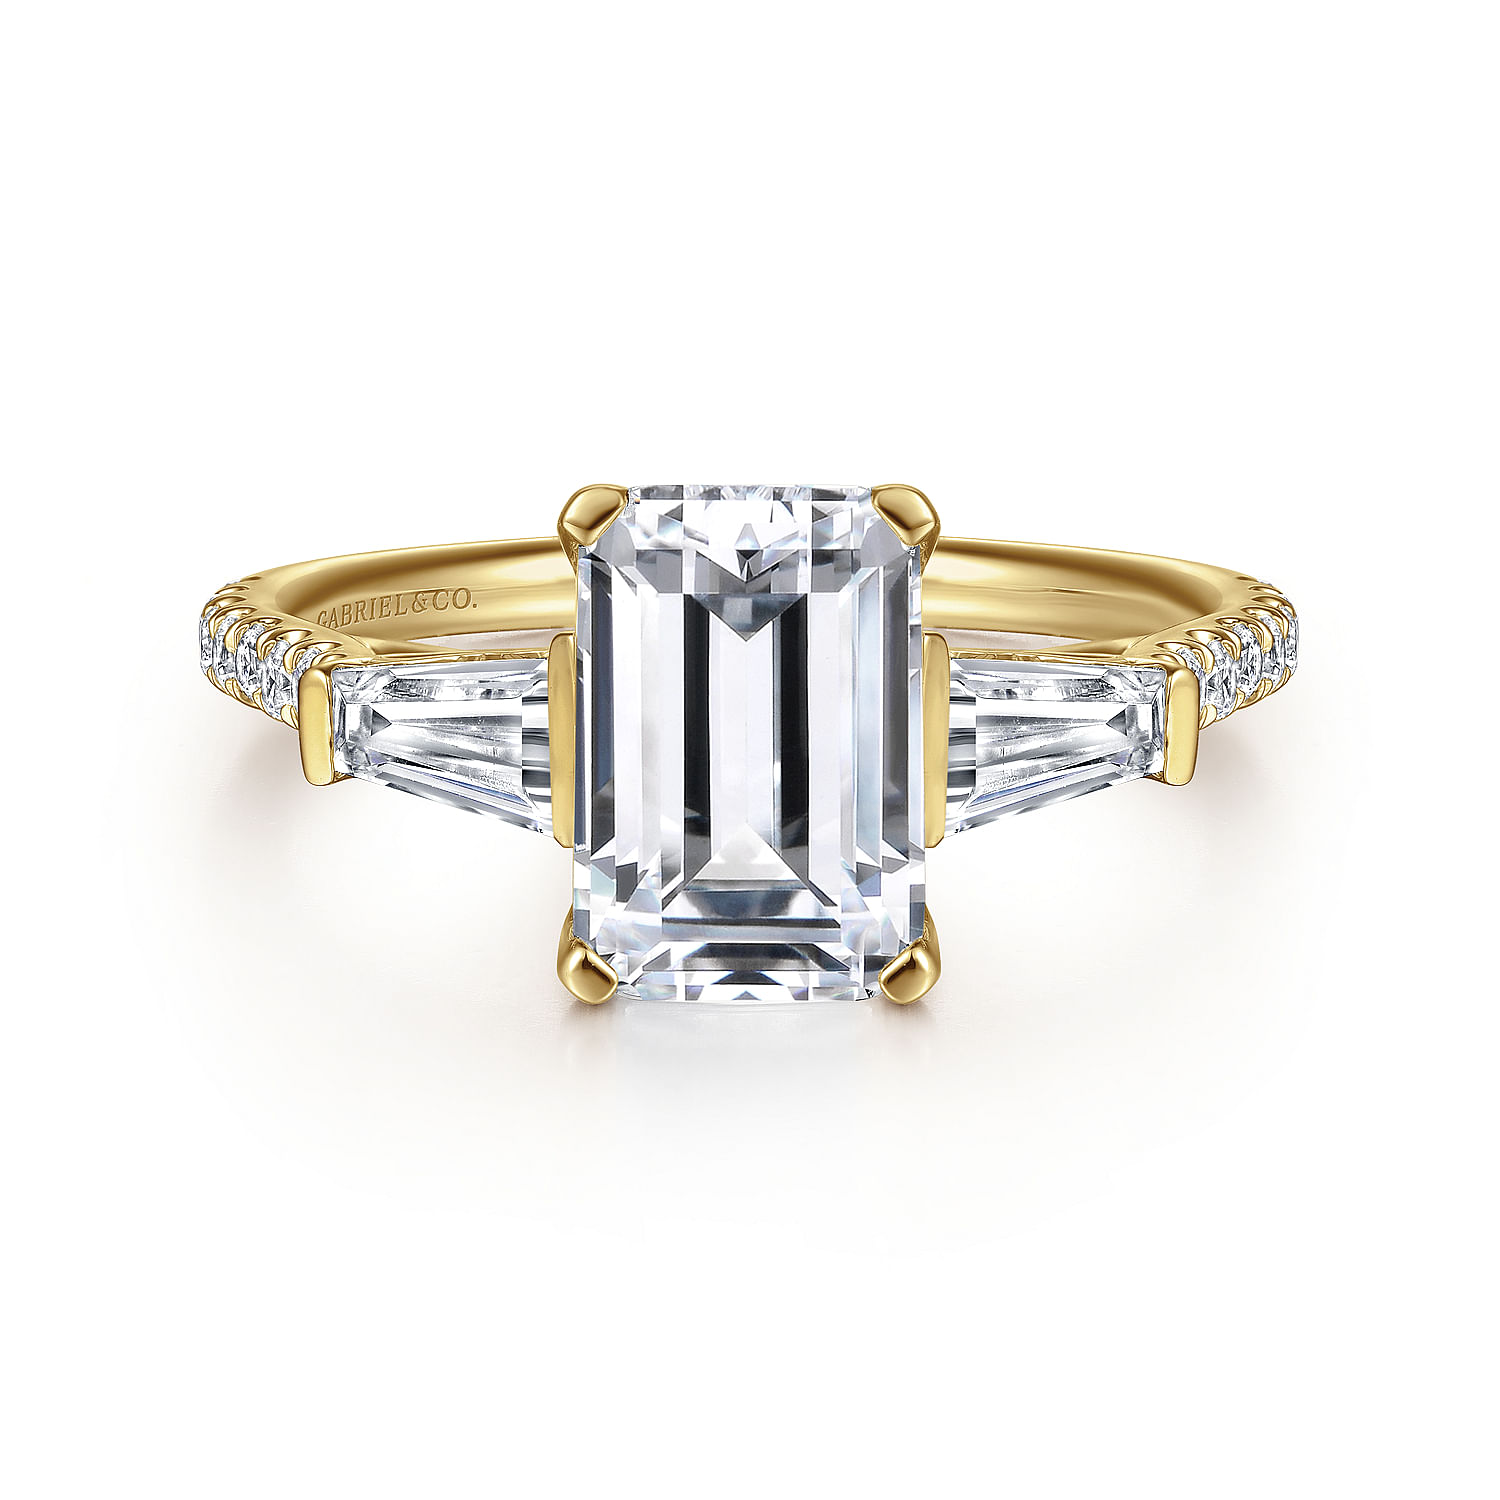 Sheryl---14K-Yellow-Gold-Emerald-Cut-Three-Stone-Diamond-Engagement-Ring1